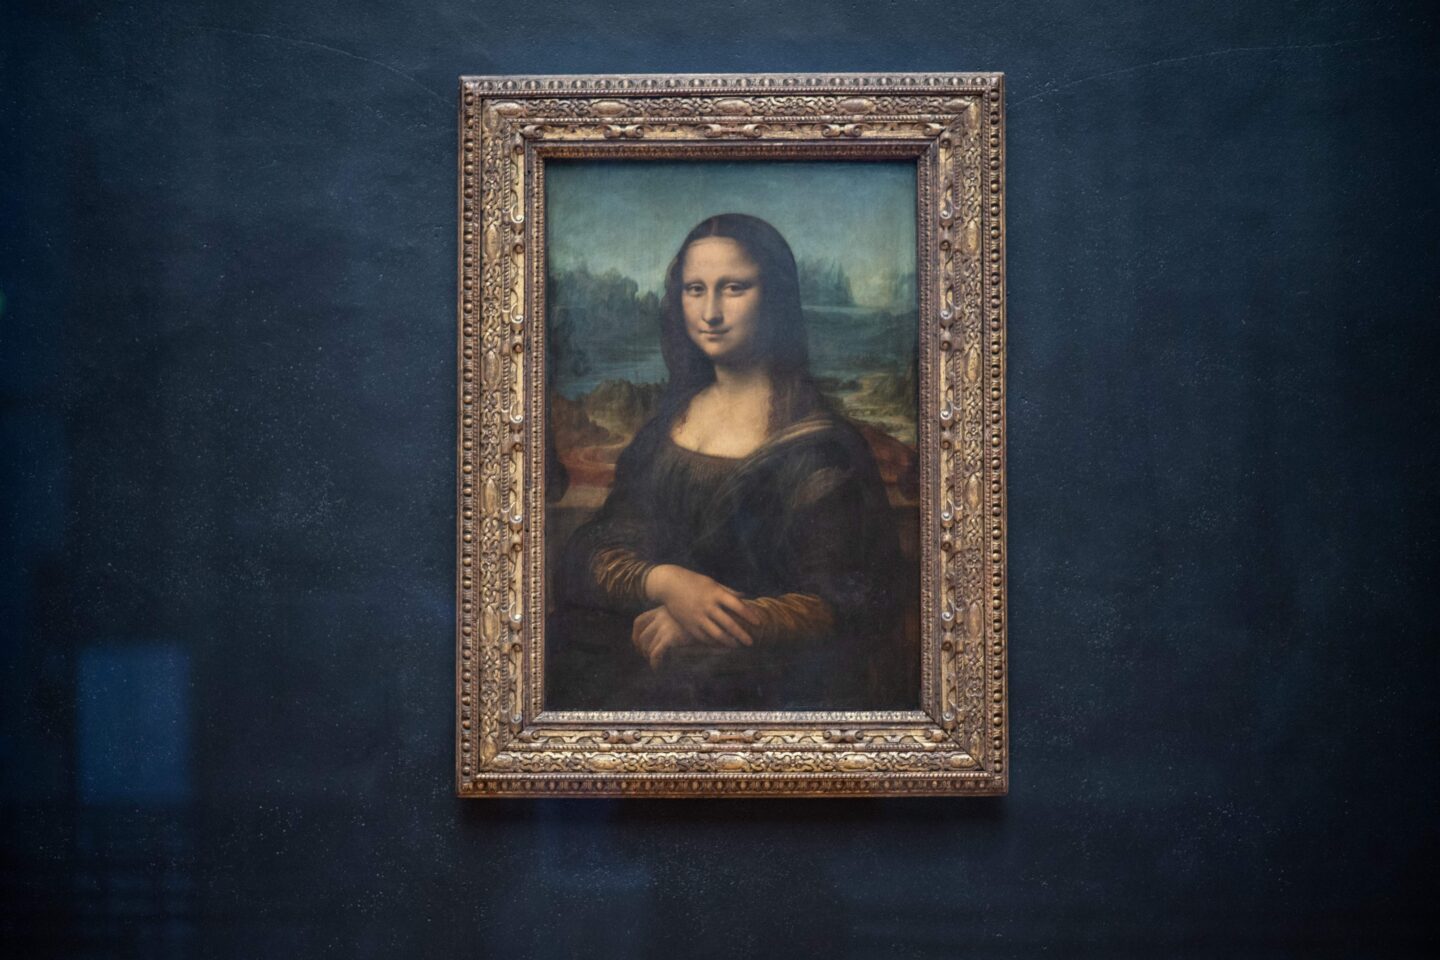 Italian Historian Claims Bridge in Background of Leonardo’s Mona Lisa Is from Small Town in Tuscany